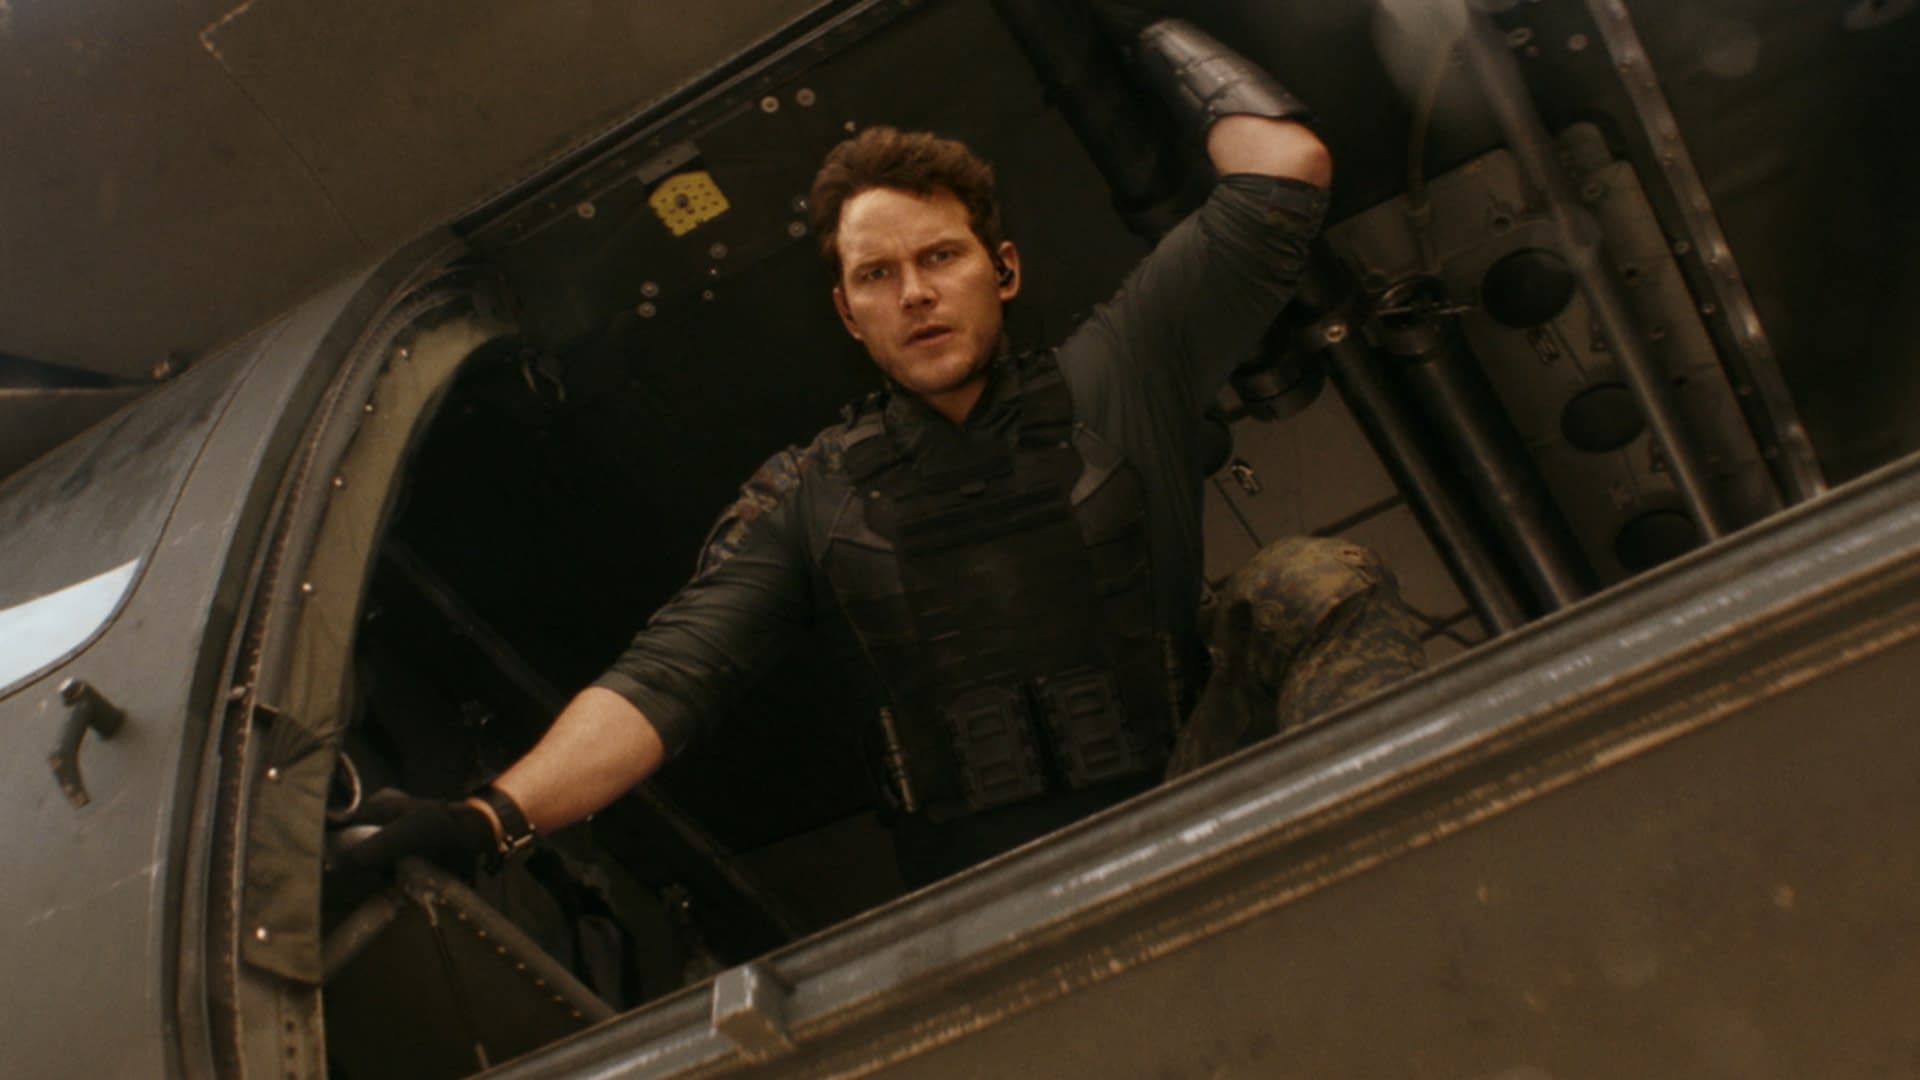 Amazon Posts First Teaser For Chris Pratt's The Tomorrow War